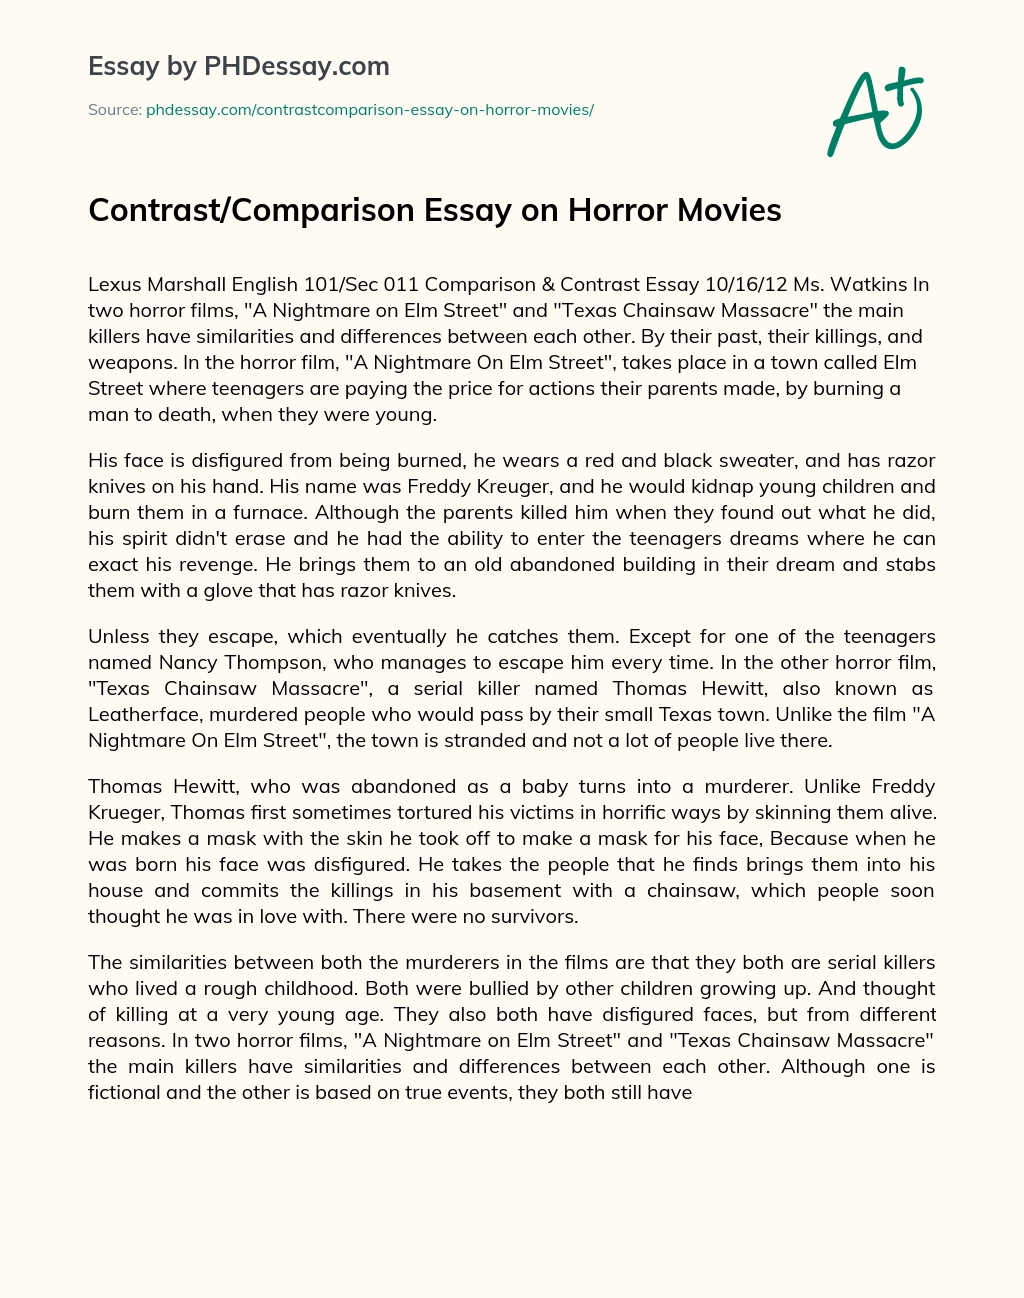 argumentative essay on horror movies